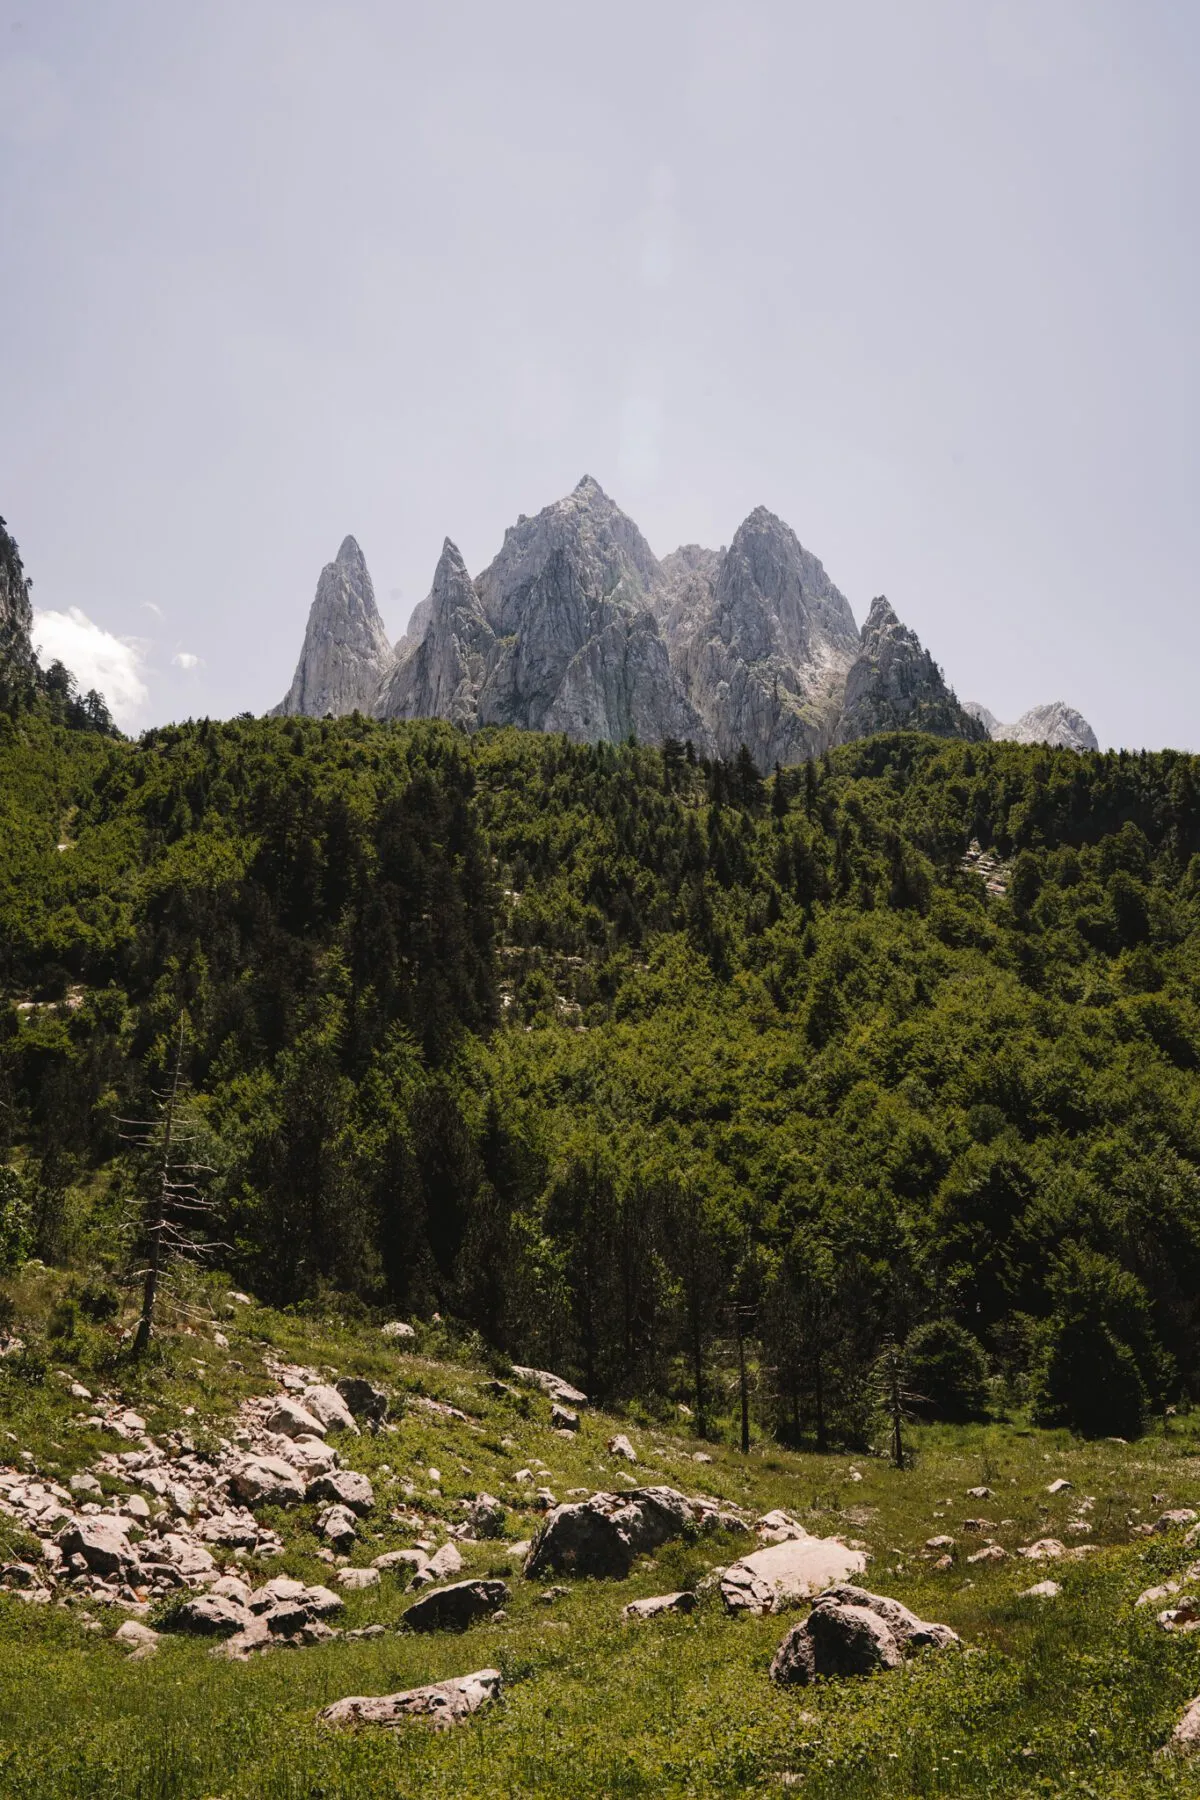 The Peaks of the Balkan